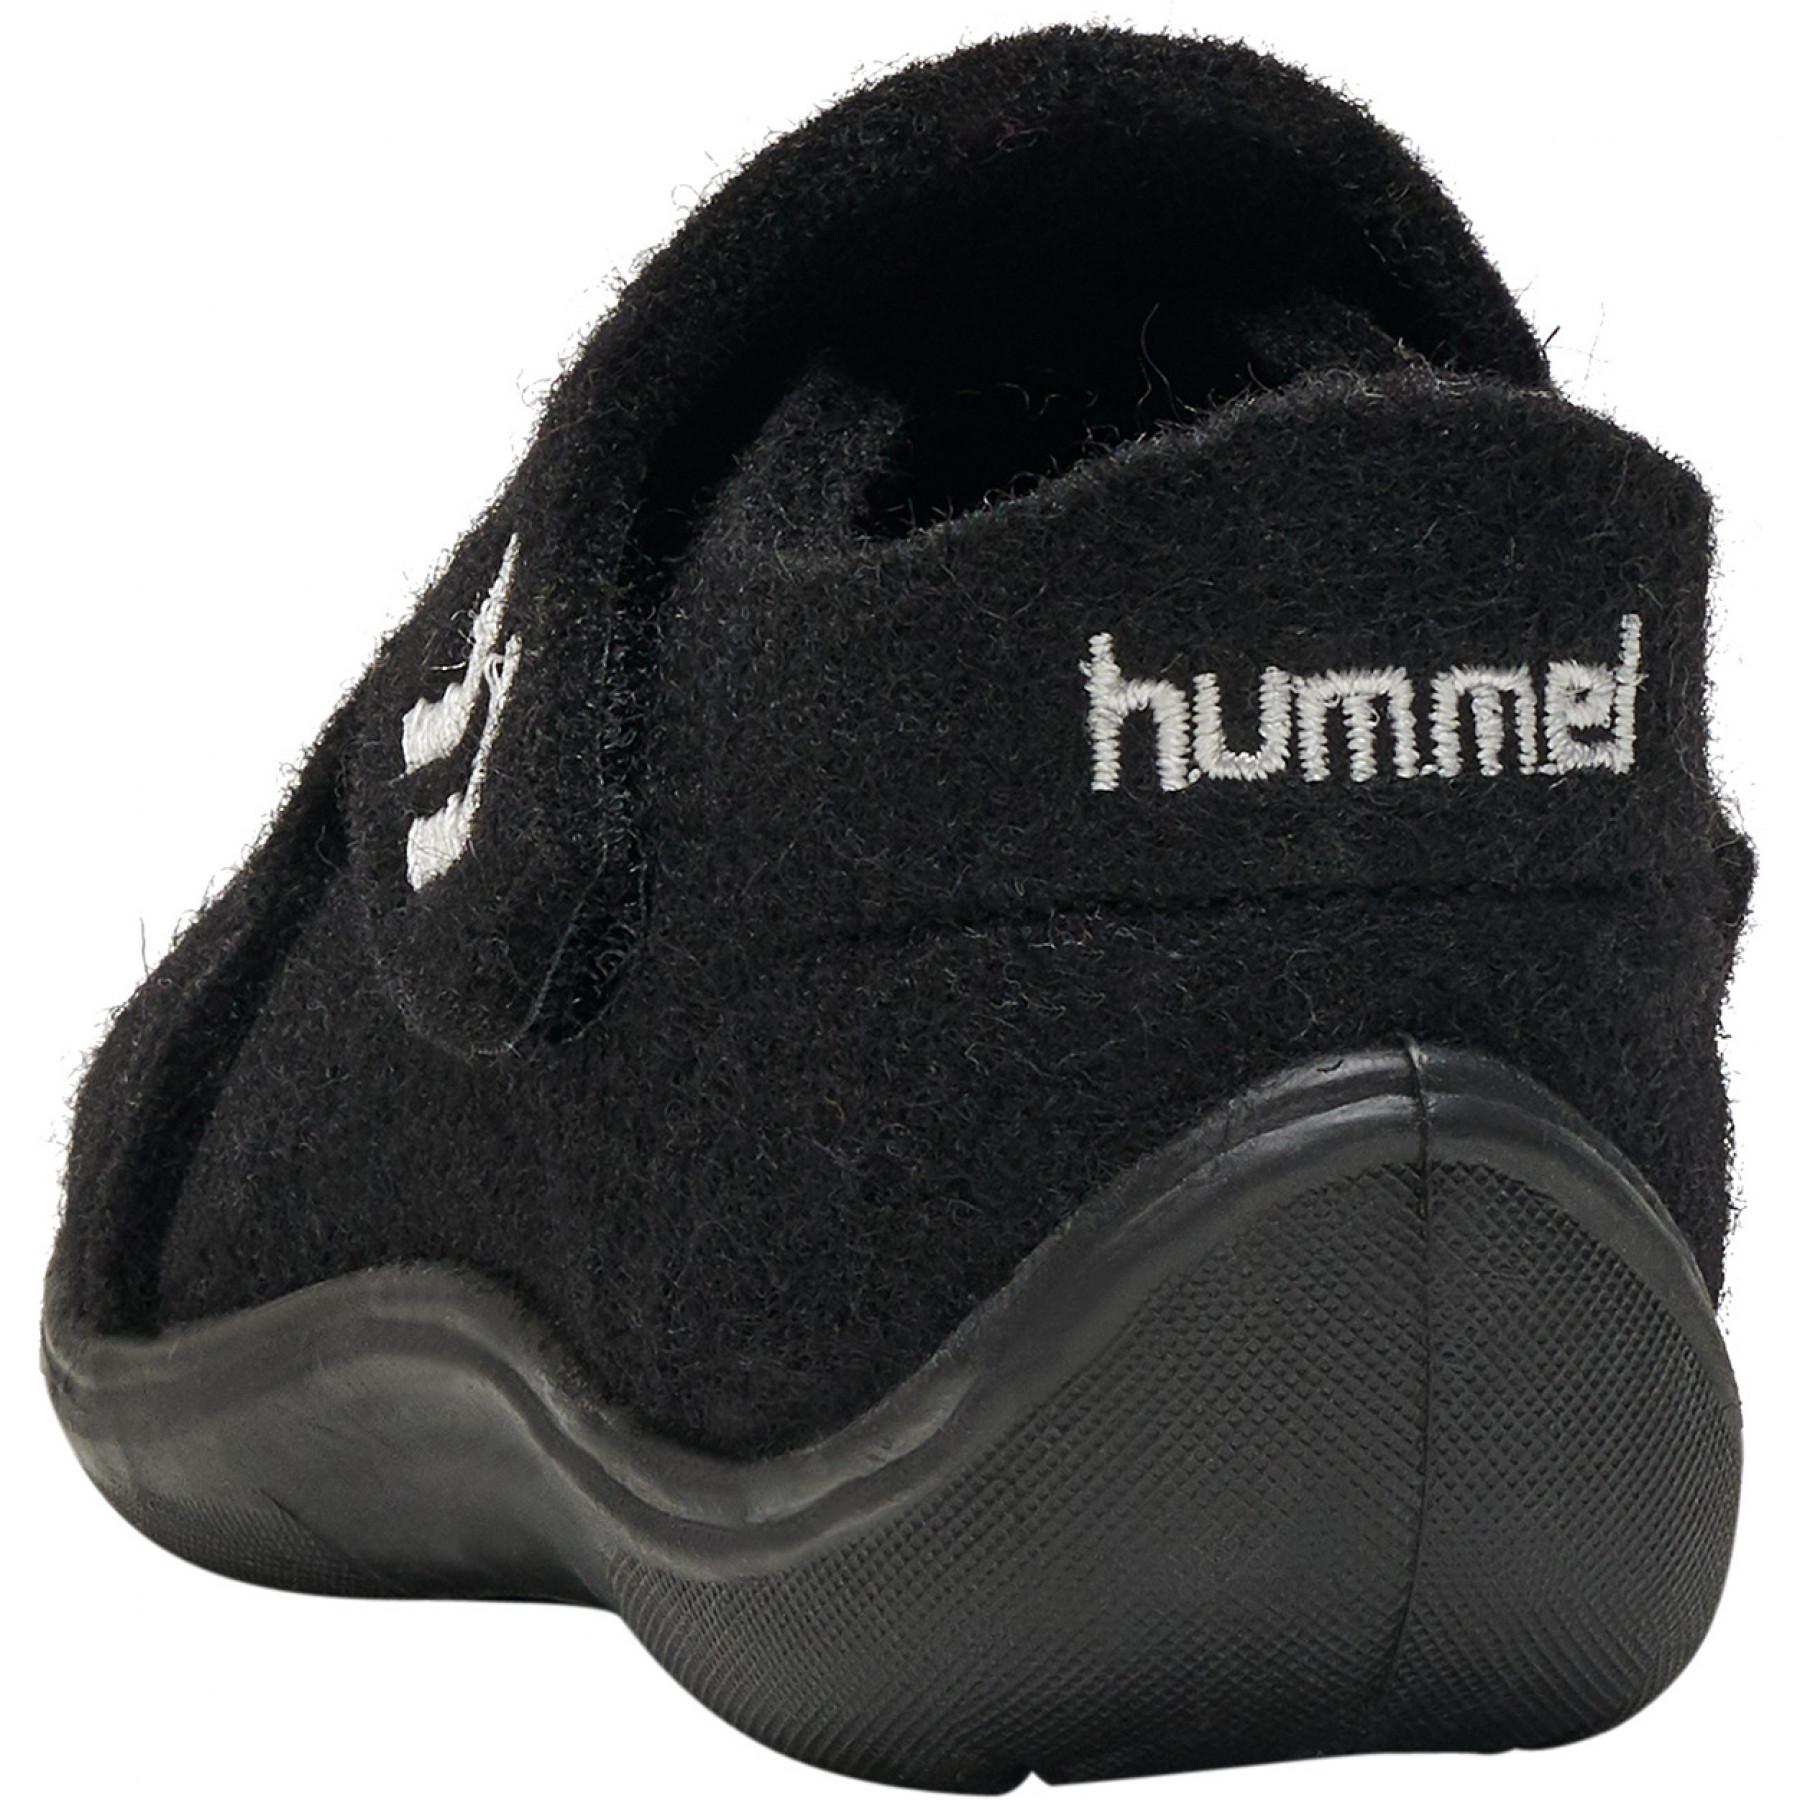 Children's sneakers Hummel wool slipper